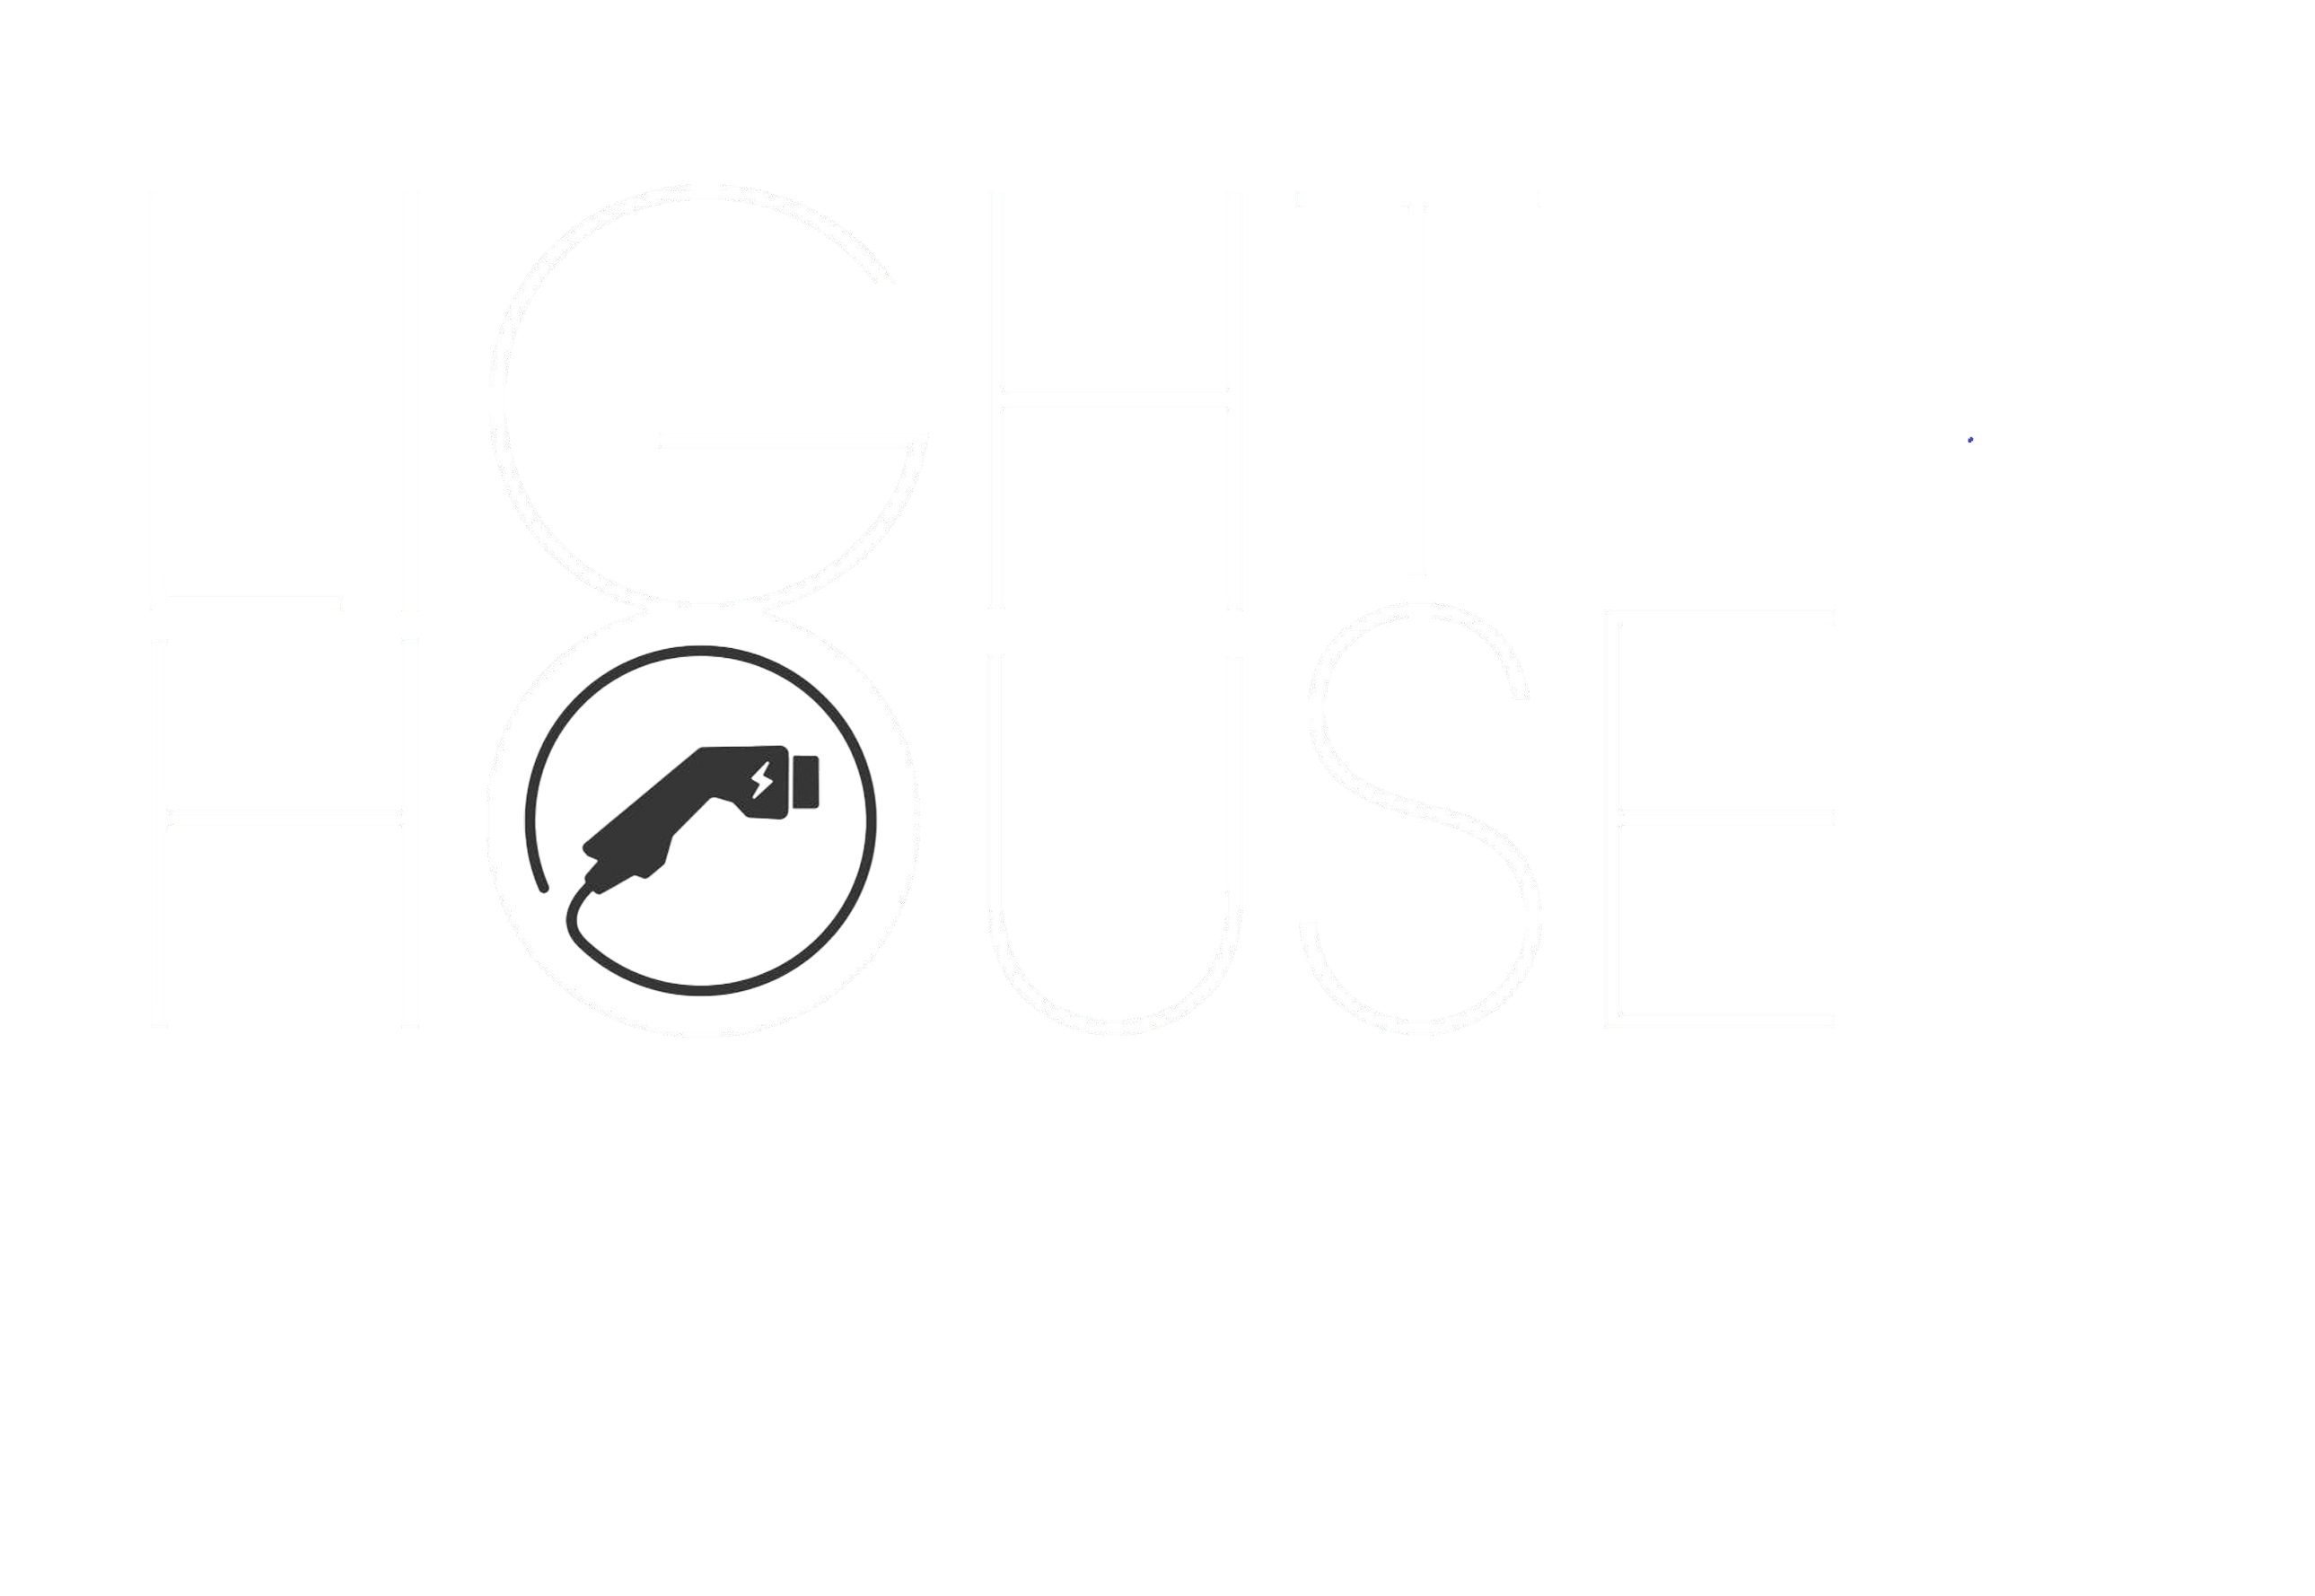 Lighthouse LLC